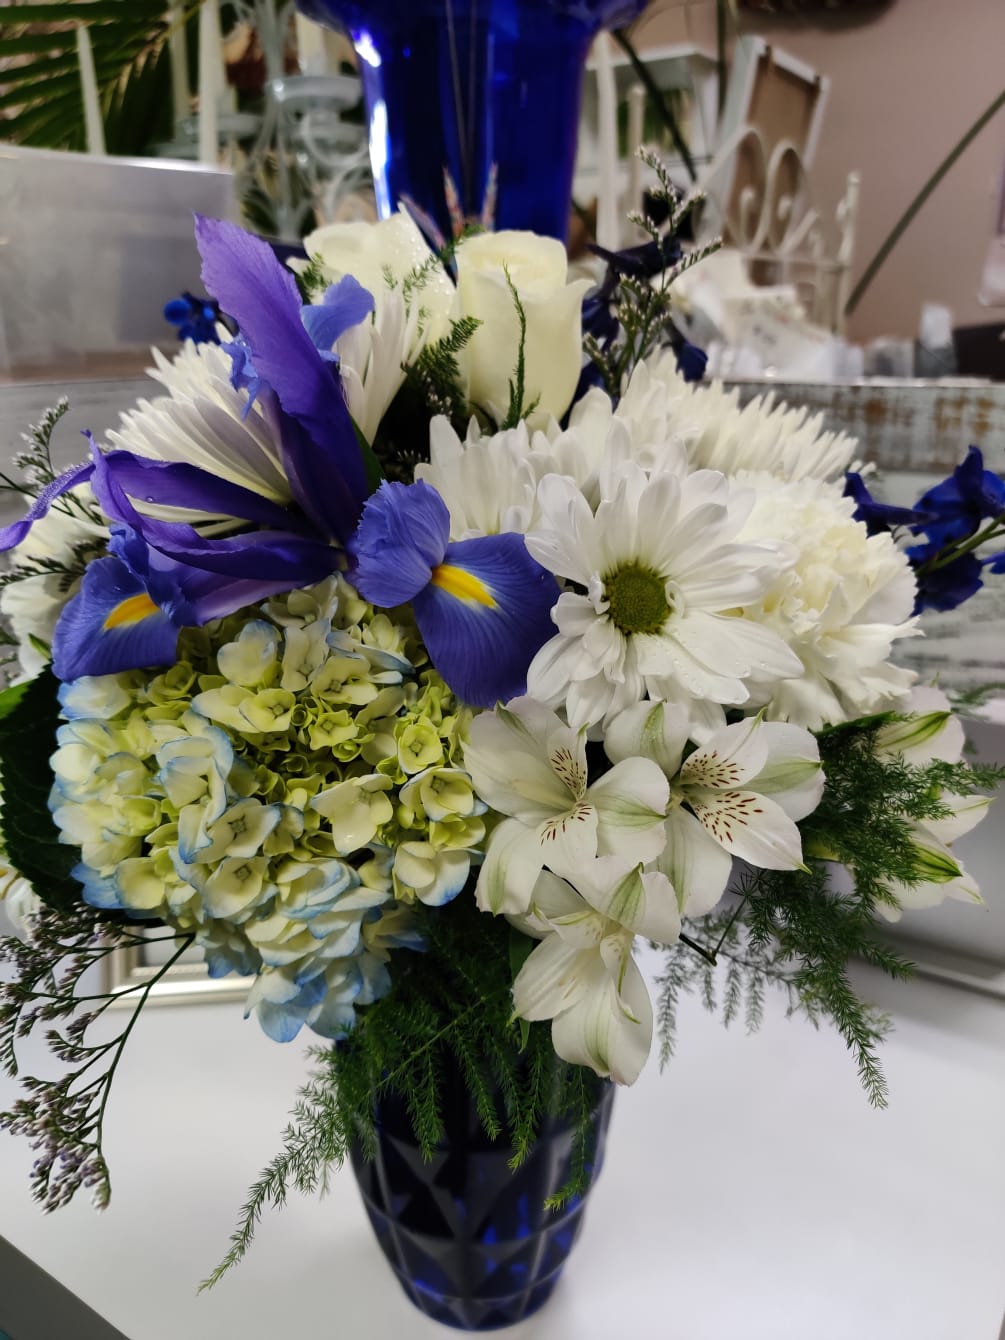 Lovely vase arrangement, designed beautifully with white roses, hydrangeas, iris, daisy poms